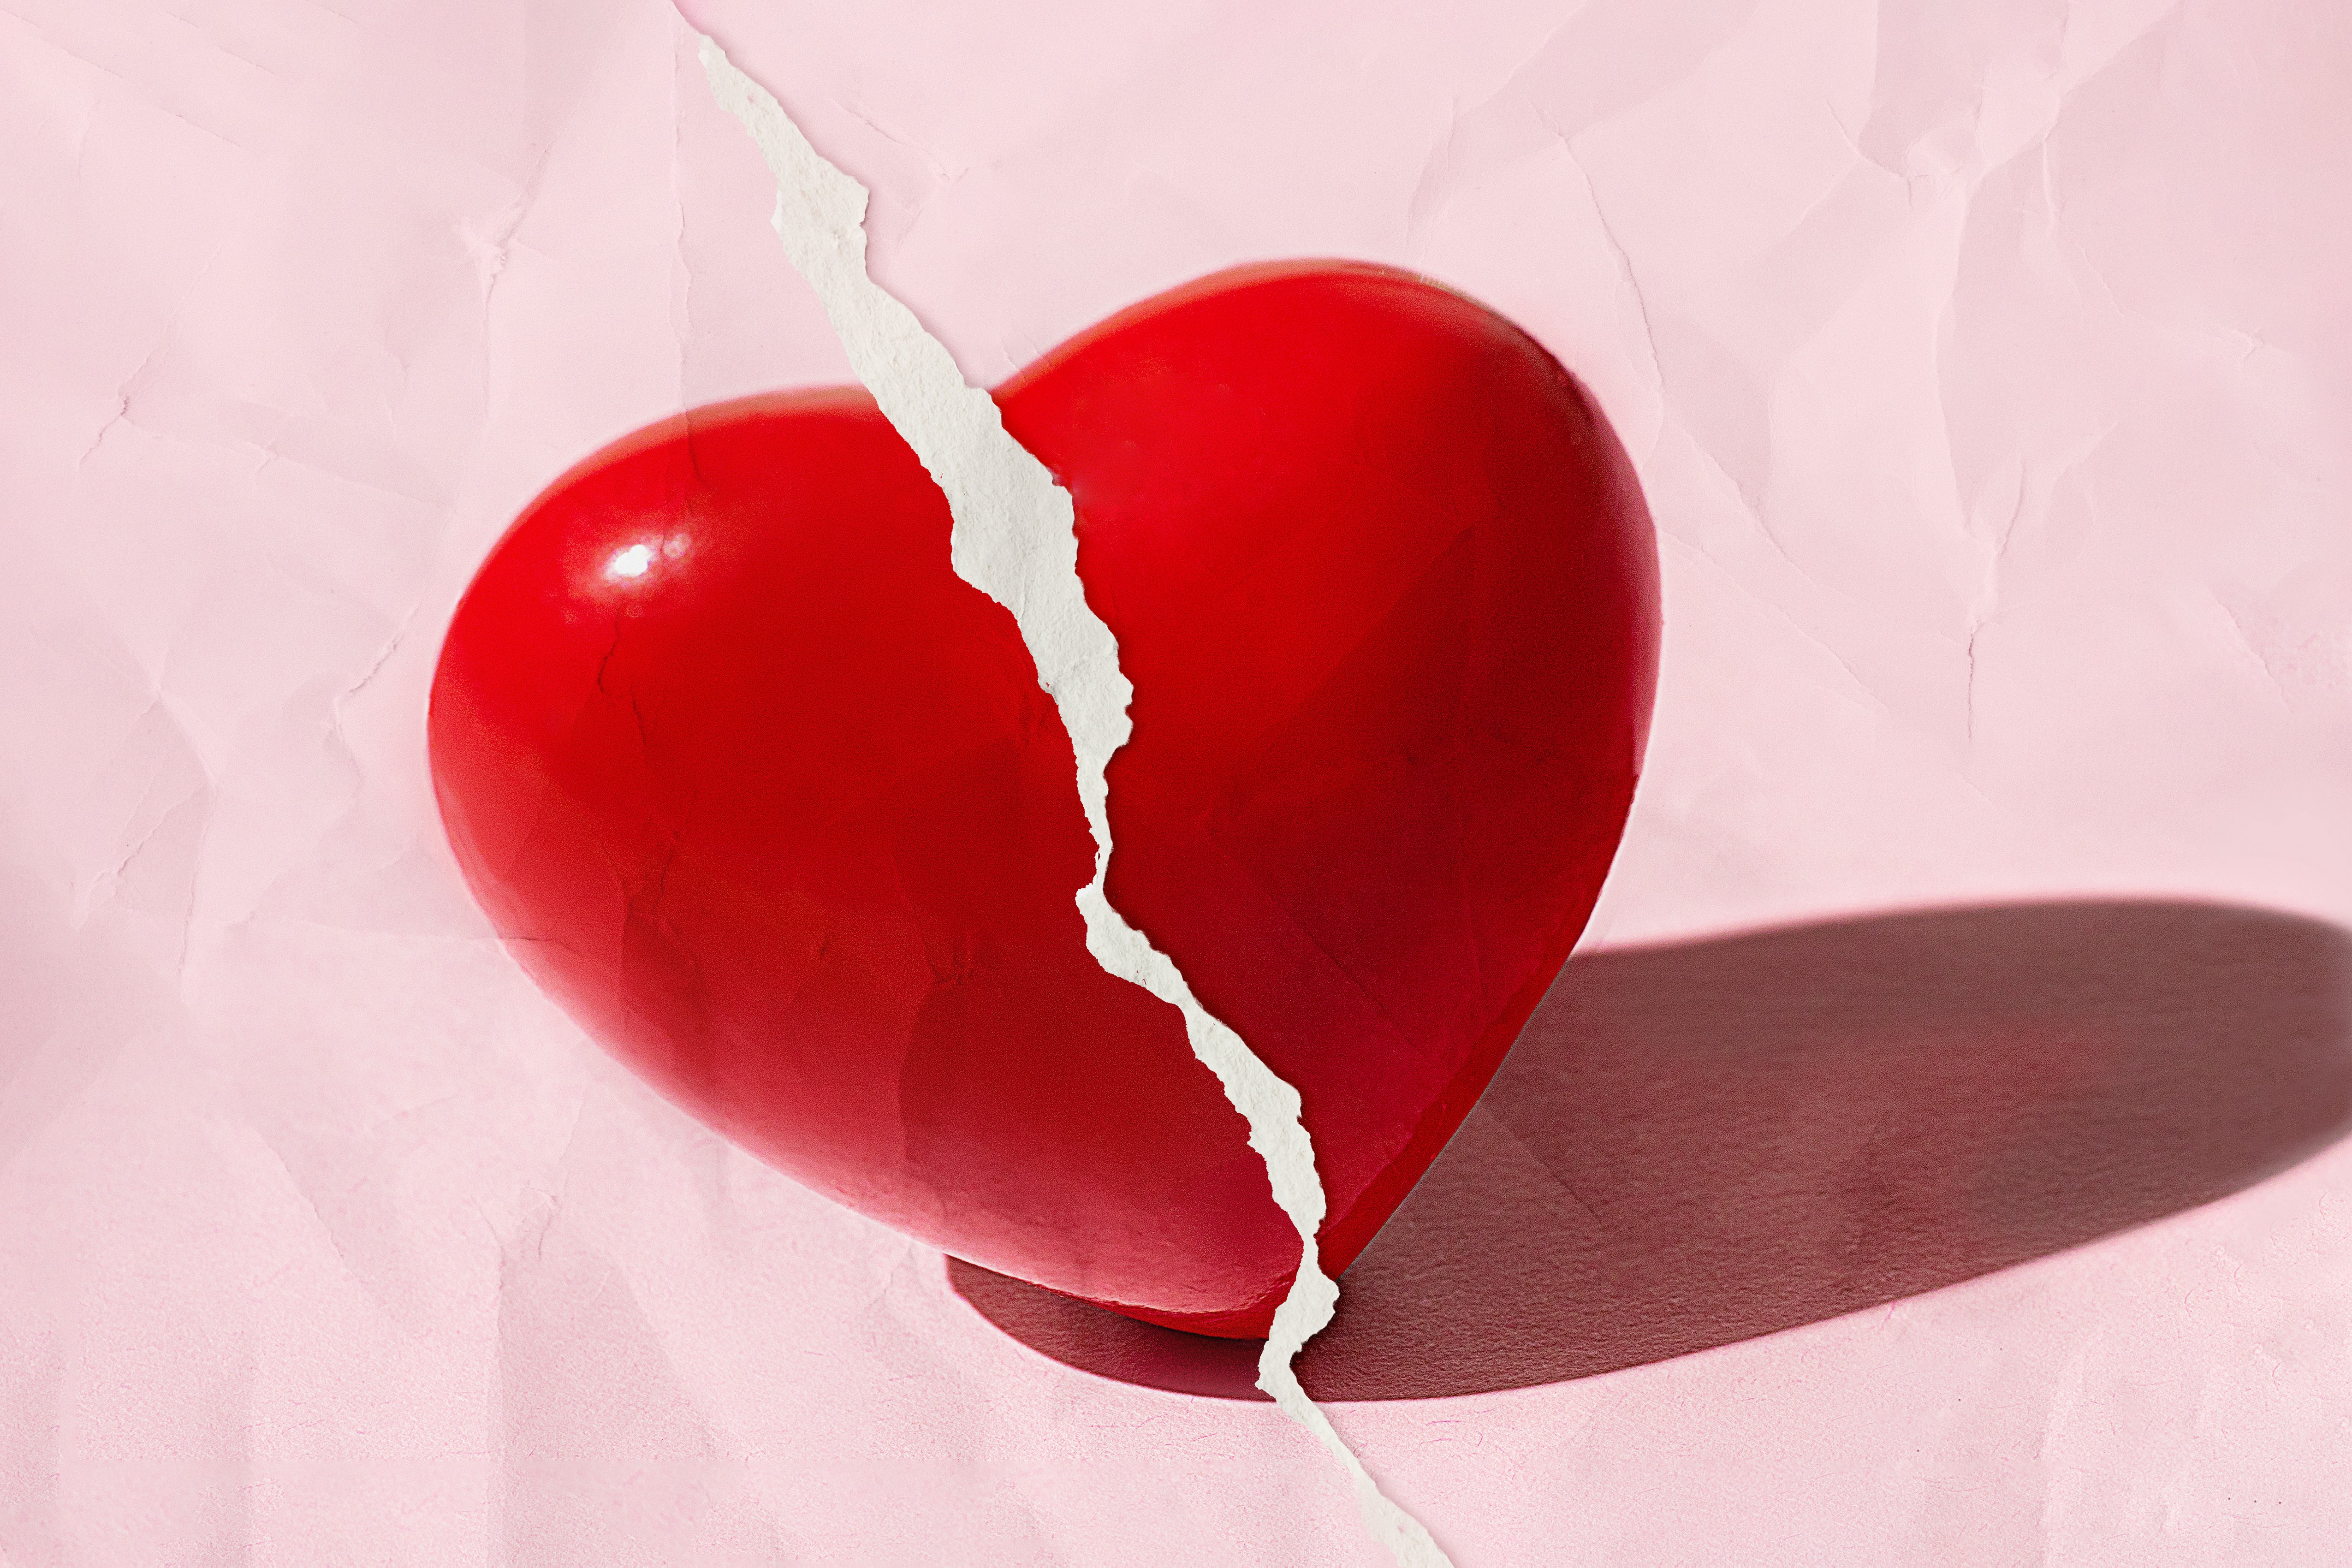 5 Ways Science Can Mend a Broken Heart